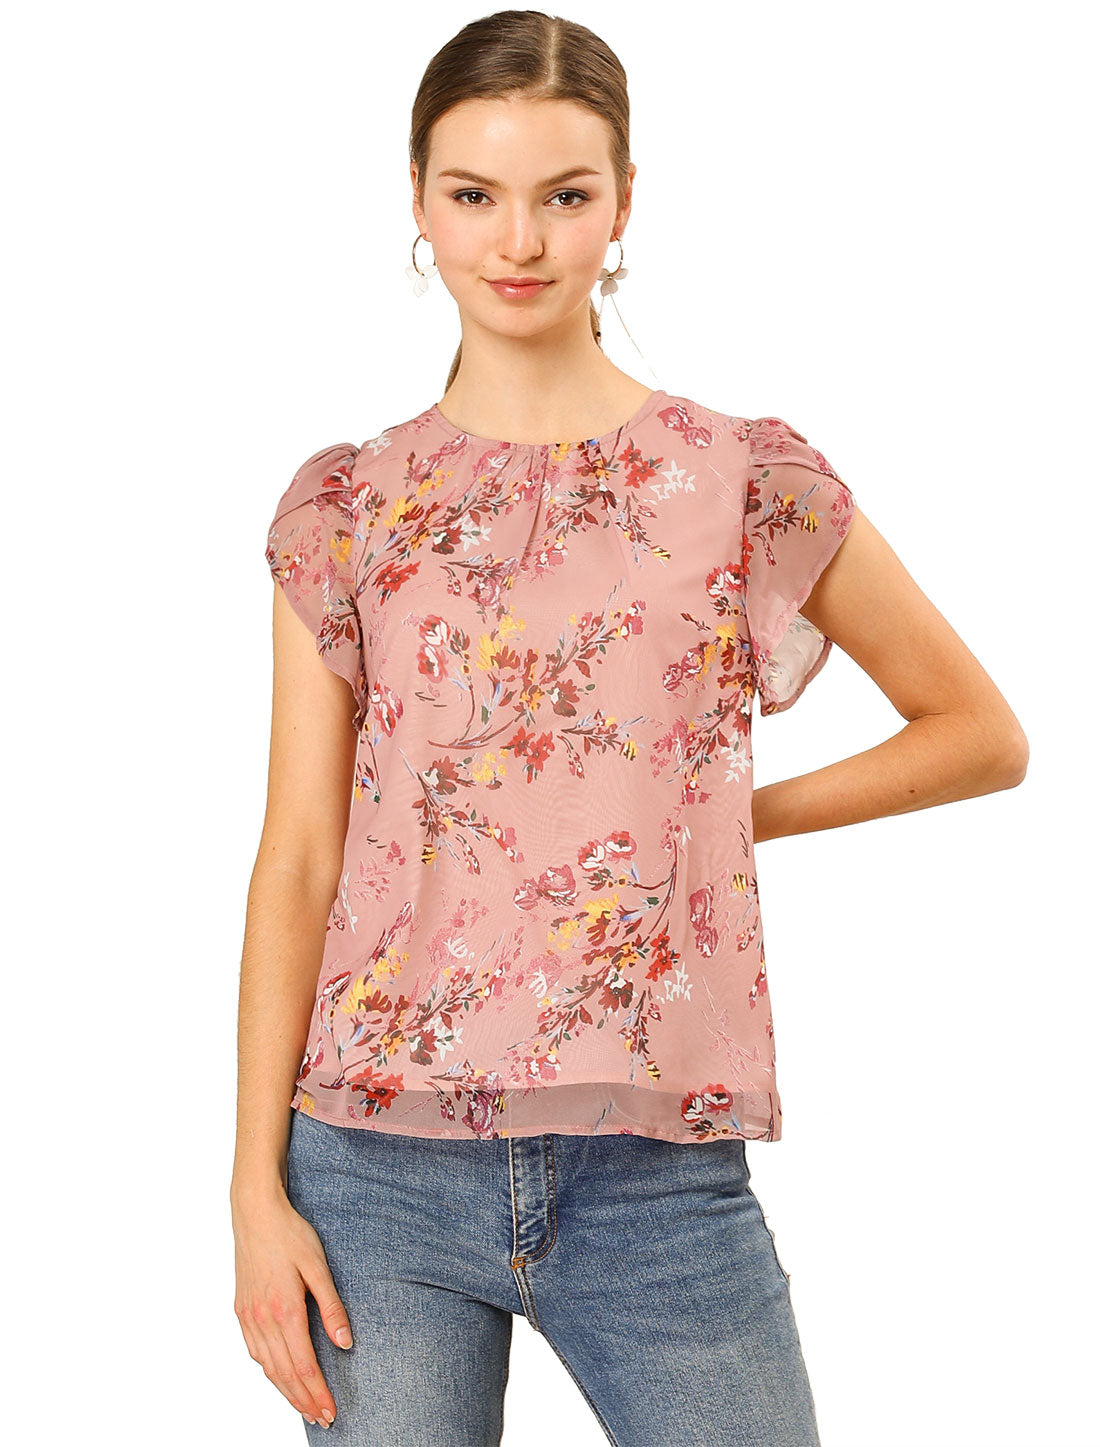 Allegra K Elegant Top Shirt Short Sleeve Floral Chiffon Blouse